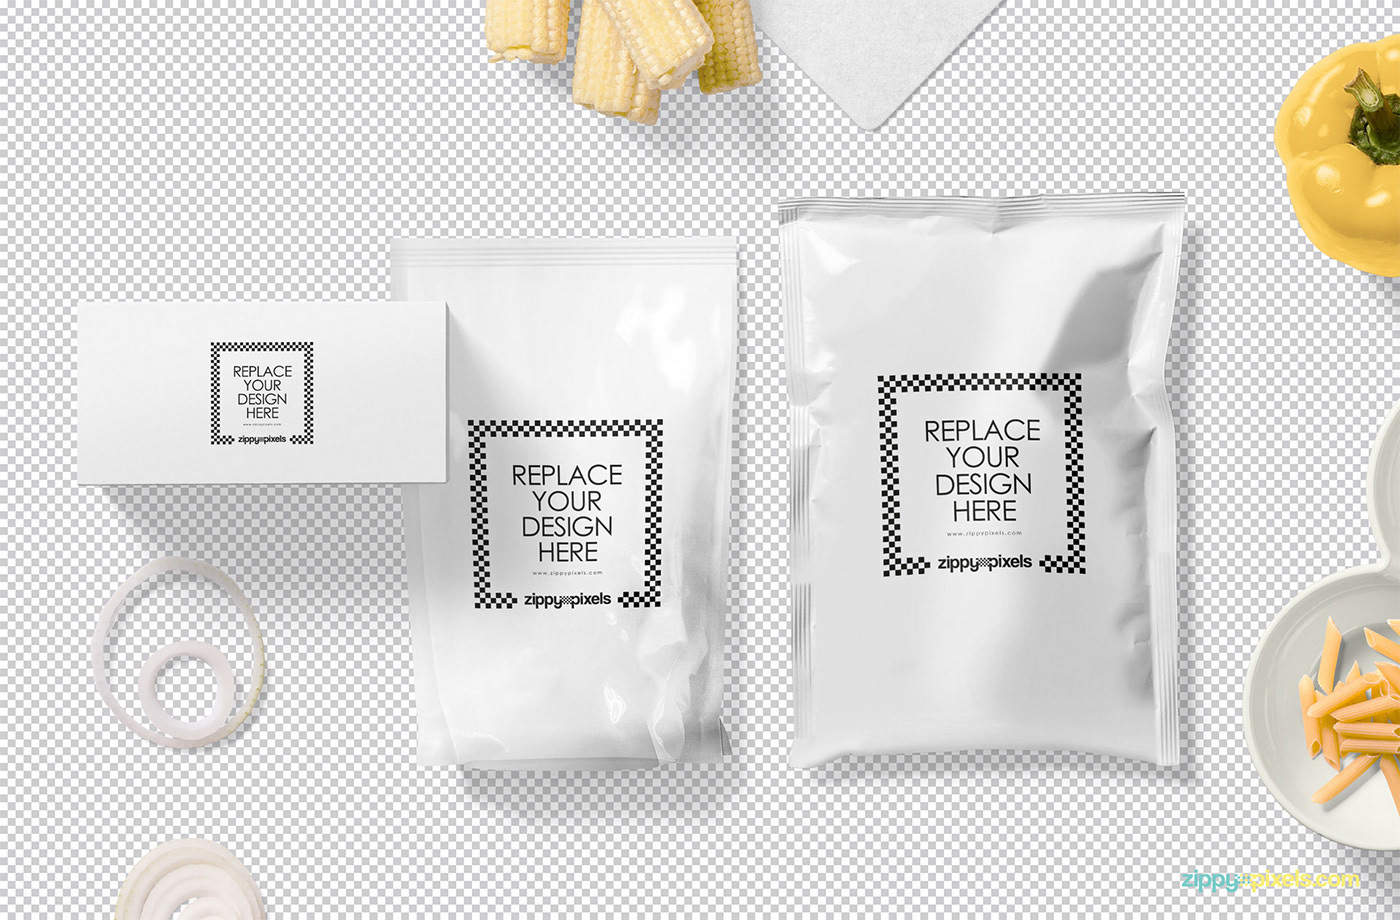 Free Food Packaging Mockup PSD on Behance